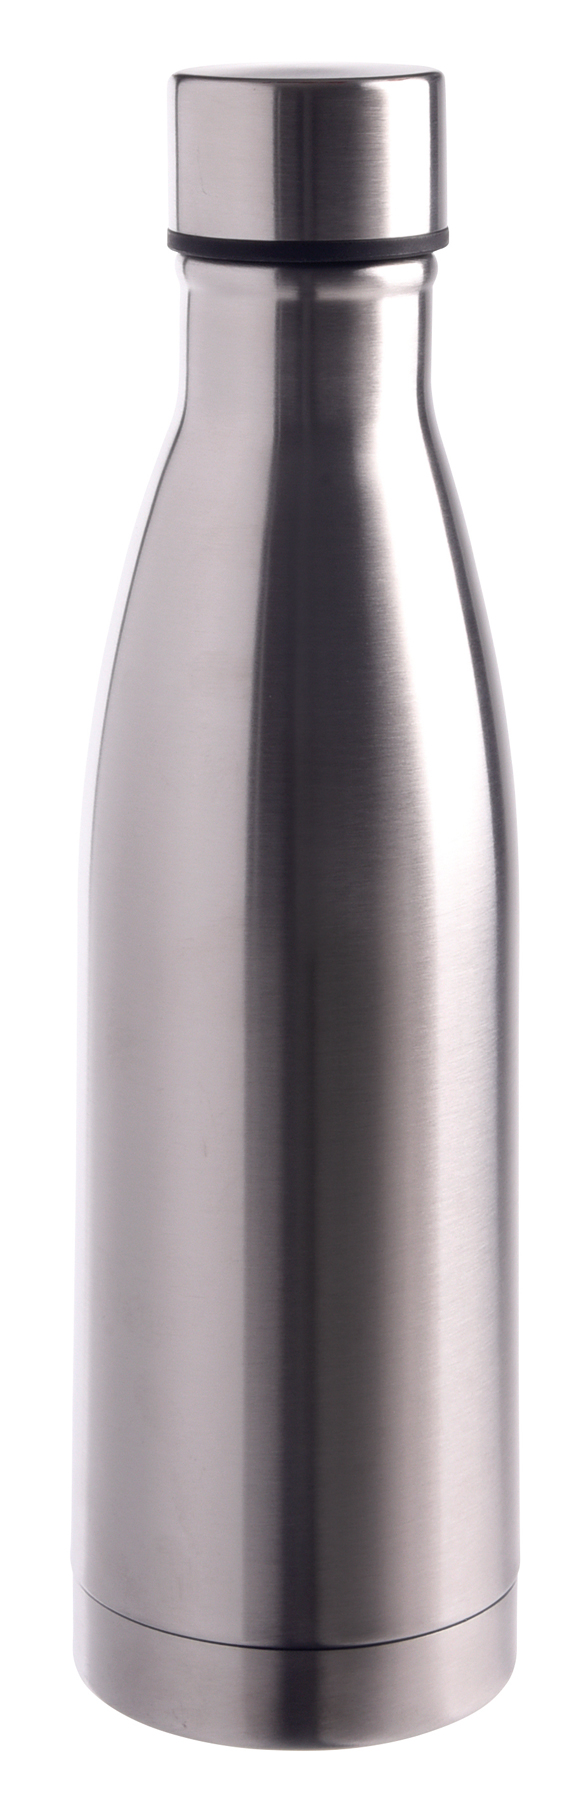 Vacuum drinking bottle LEGENDY - silver